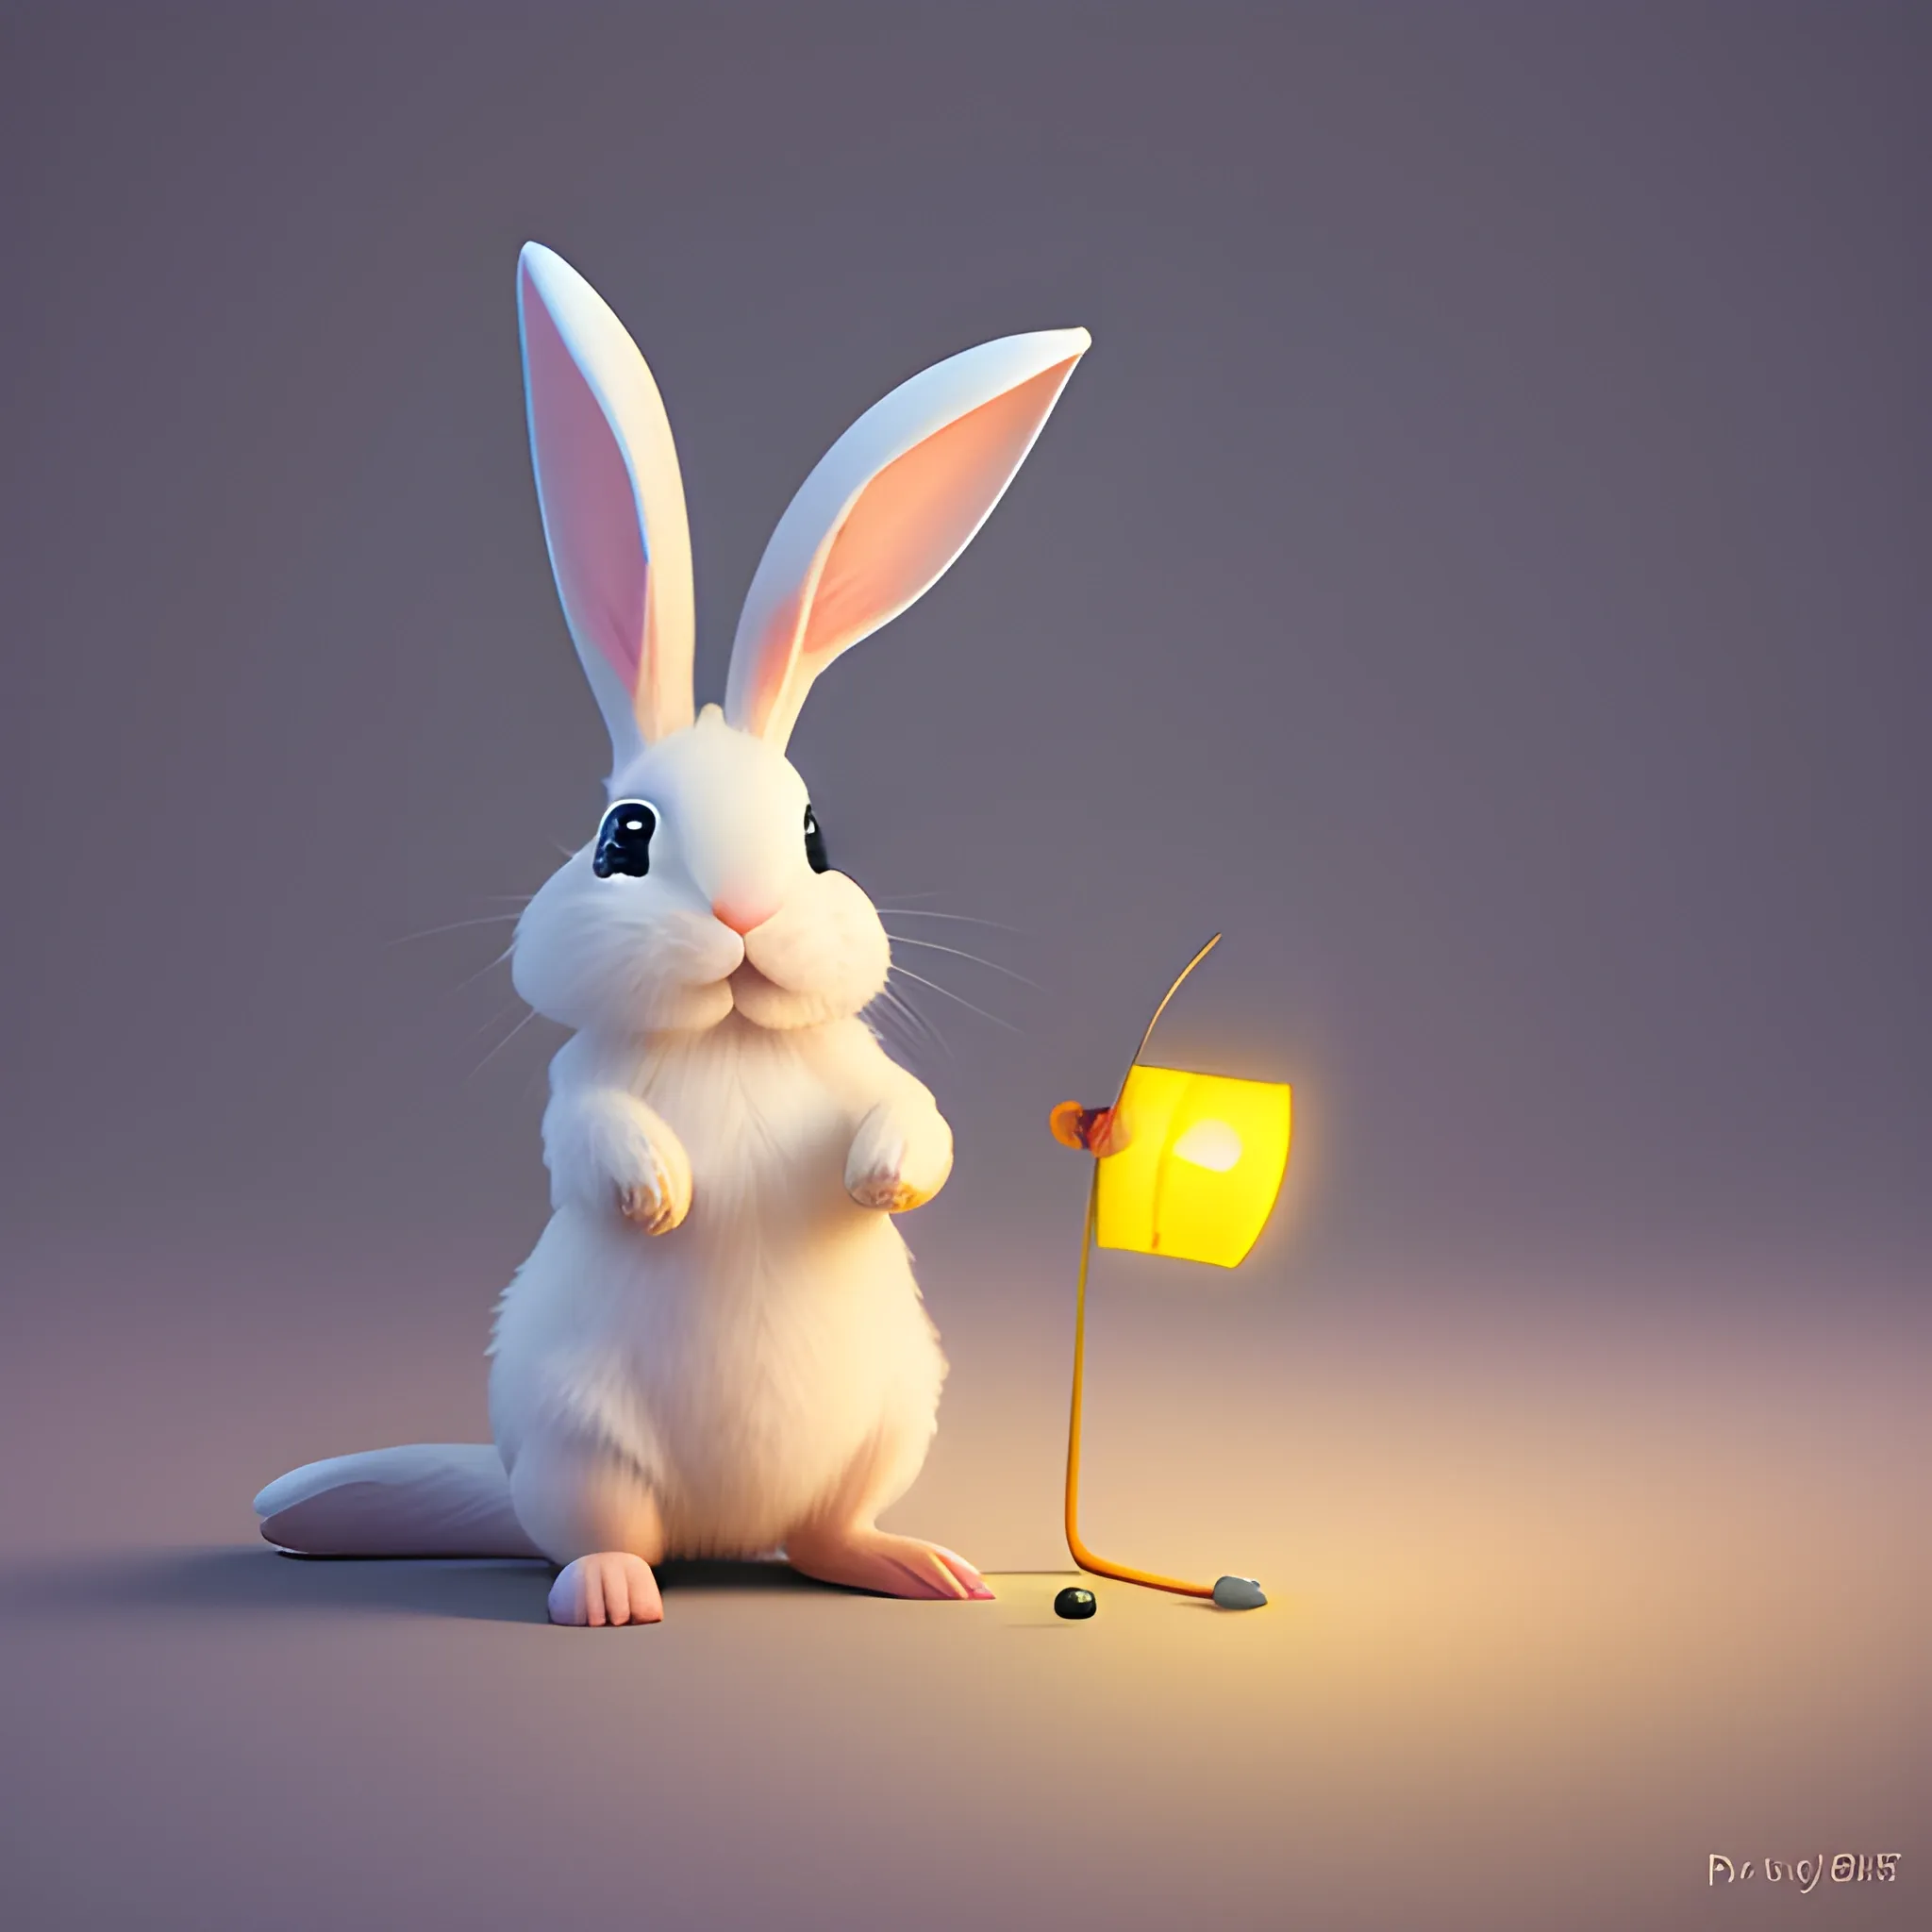 happy rabbit playing, painting a canvas, cute, pixar, photorealism 4k, octane render, clean design, beautiful light